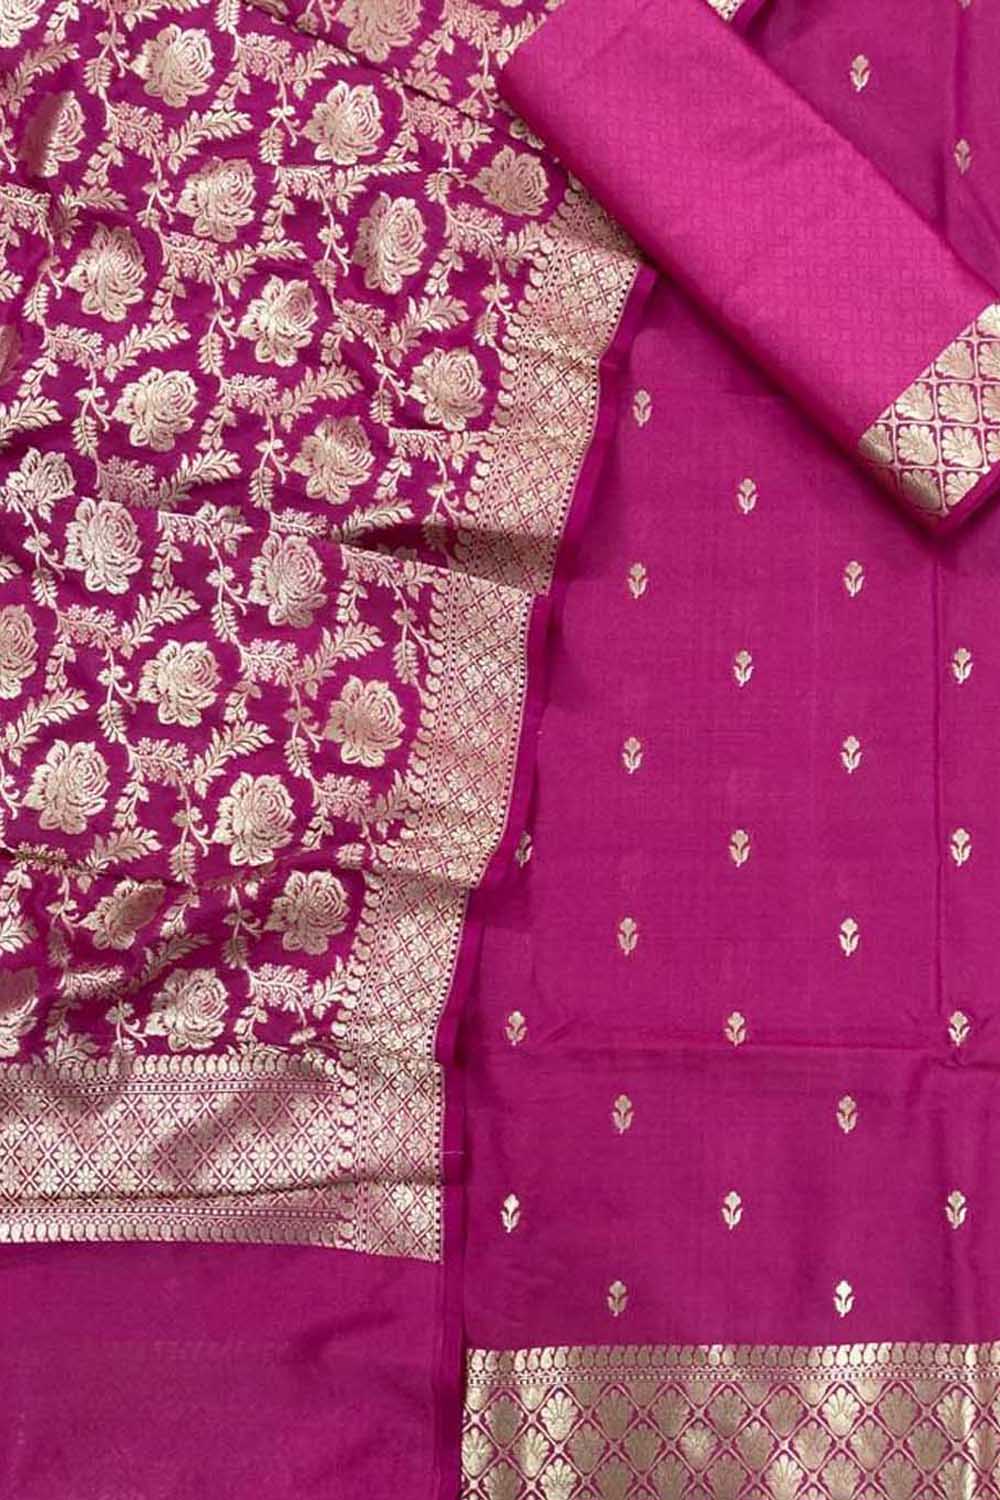 Stunning Pink Banarasi Silk Suit Set - Unstitched Three Piece for Elegant Look